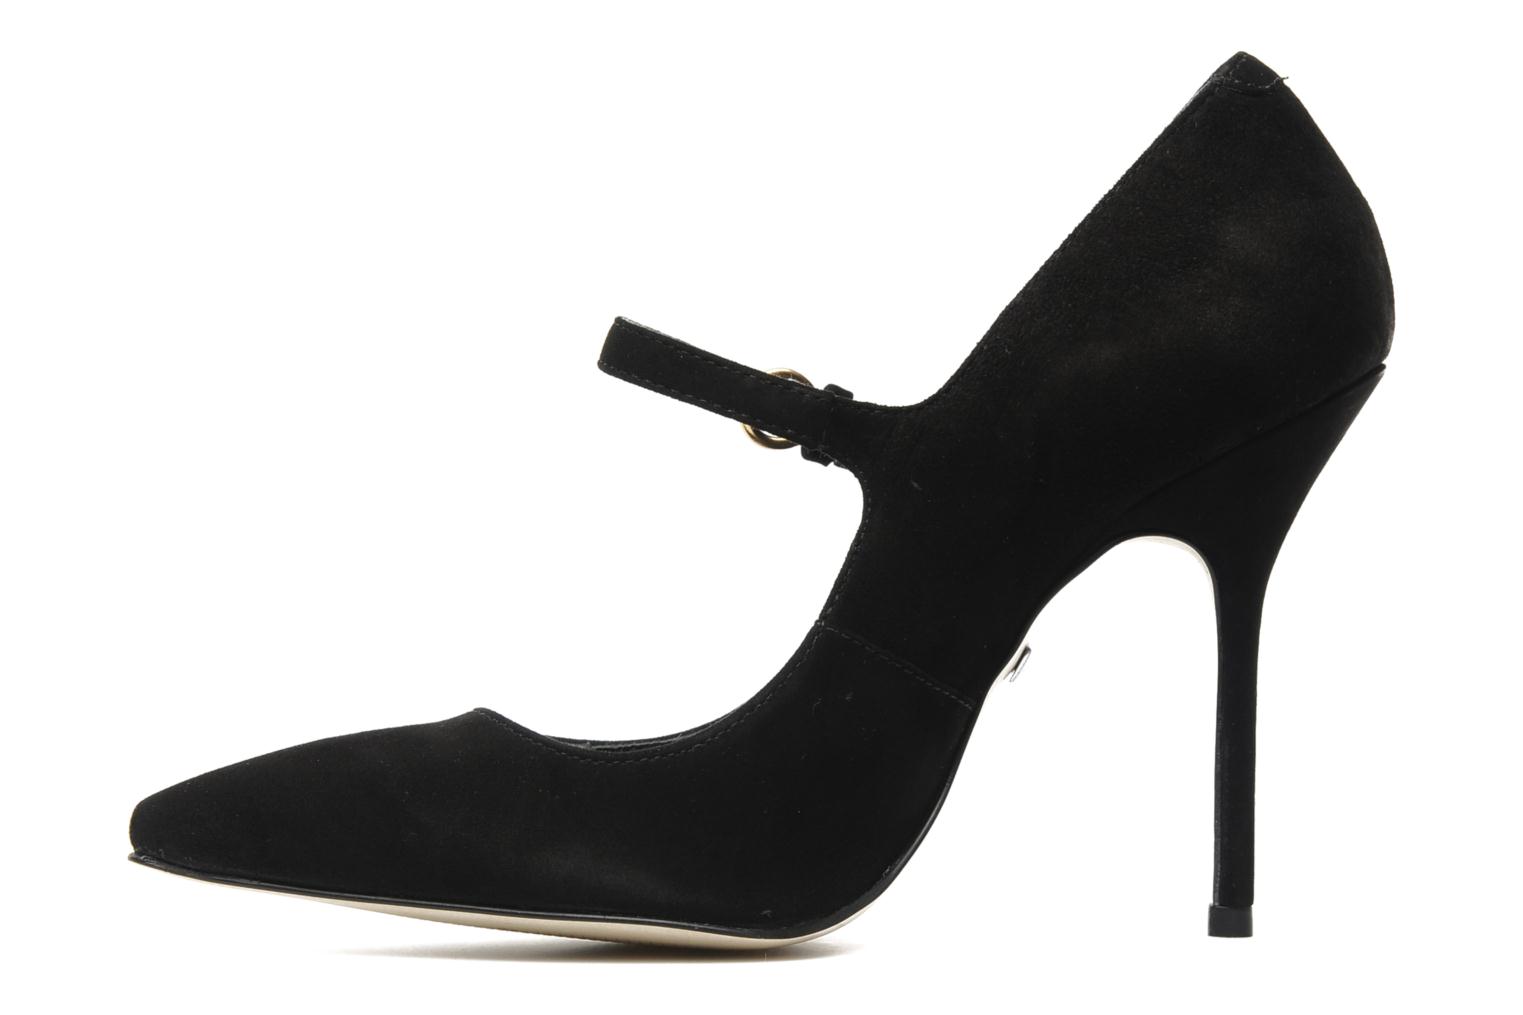 Buffalo Bolina High heels in Black at Sarenza.co.uk (123449)